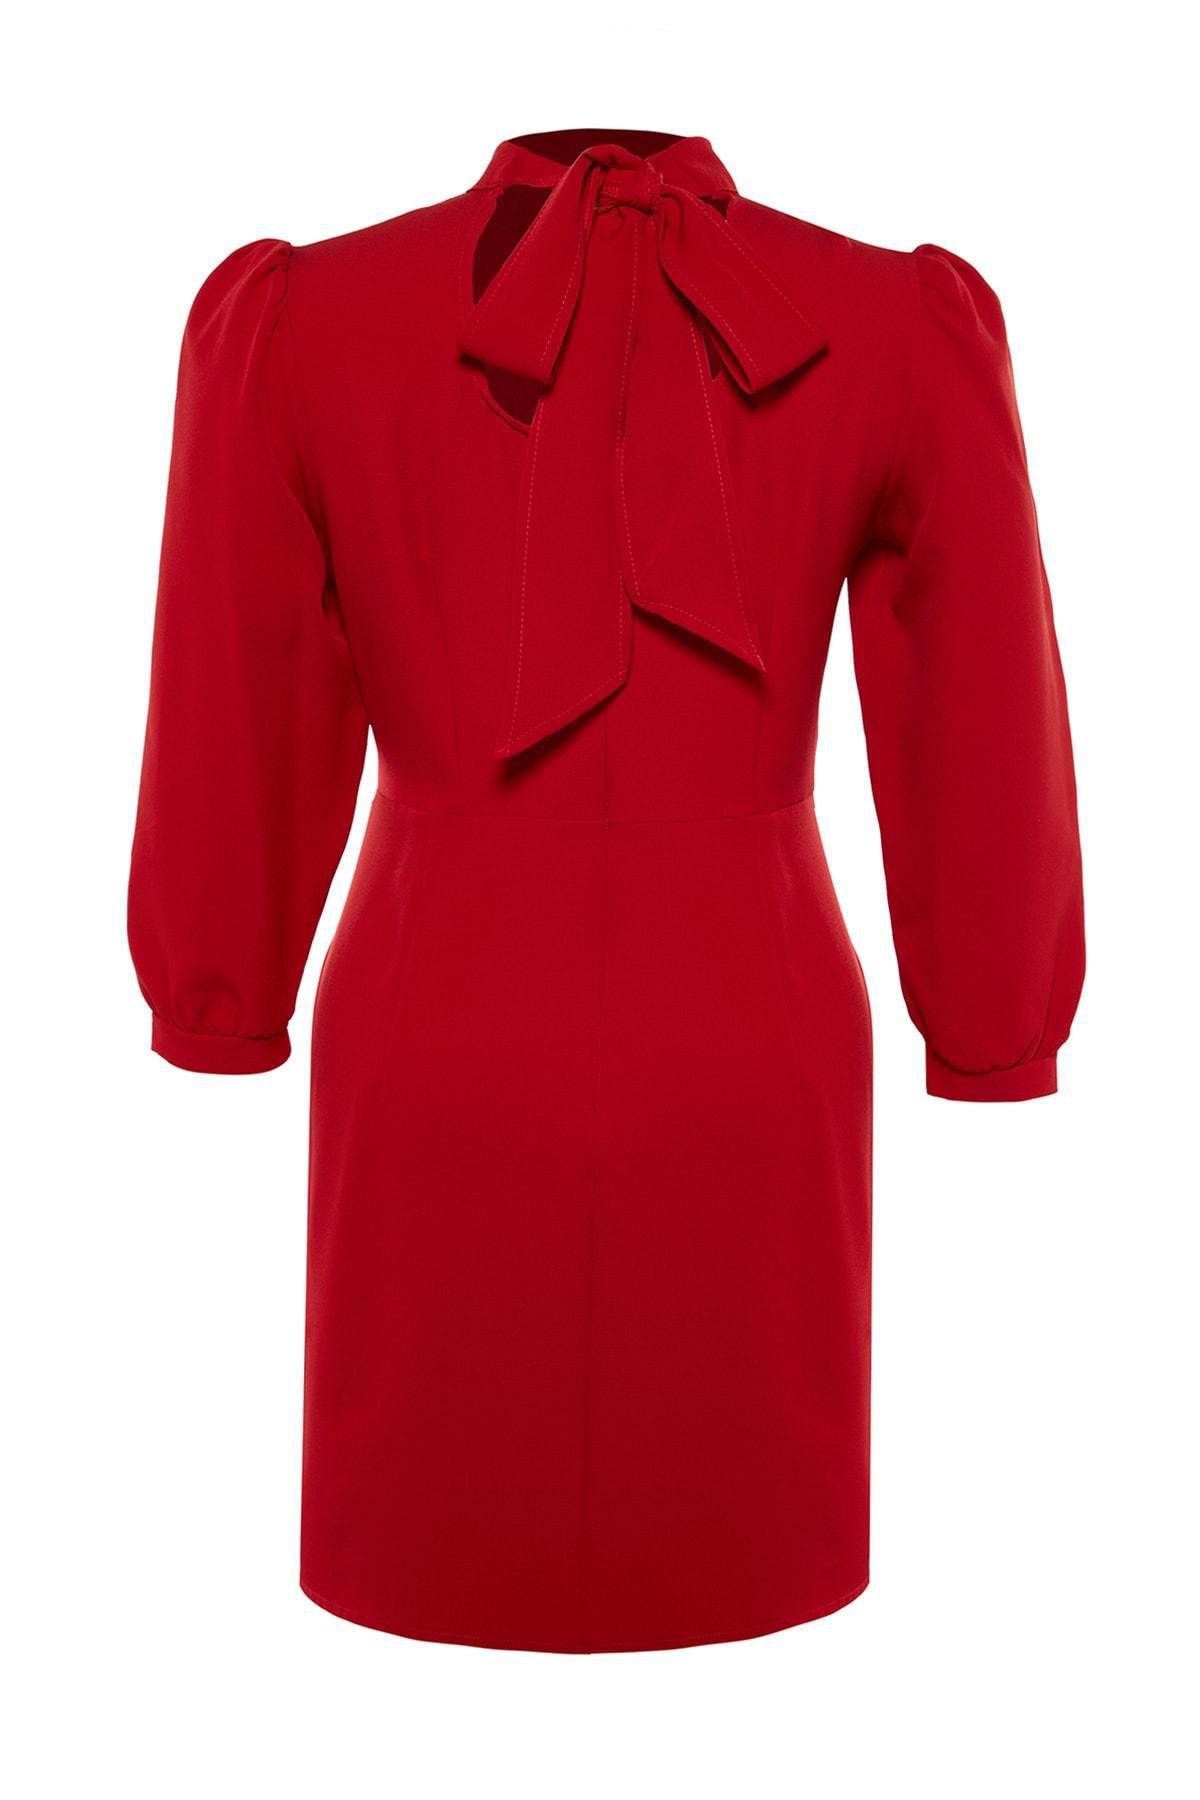 Trendyol - Red Basic Plus Size Mini Dress